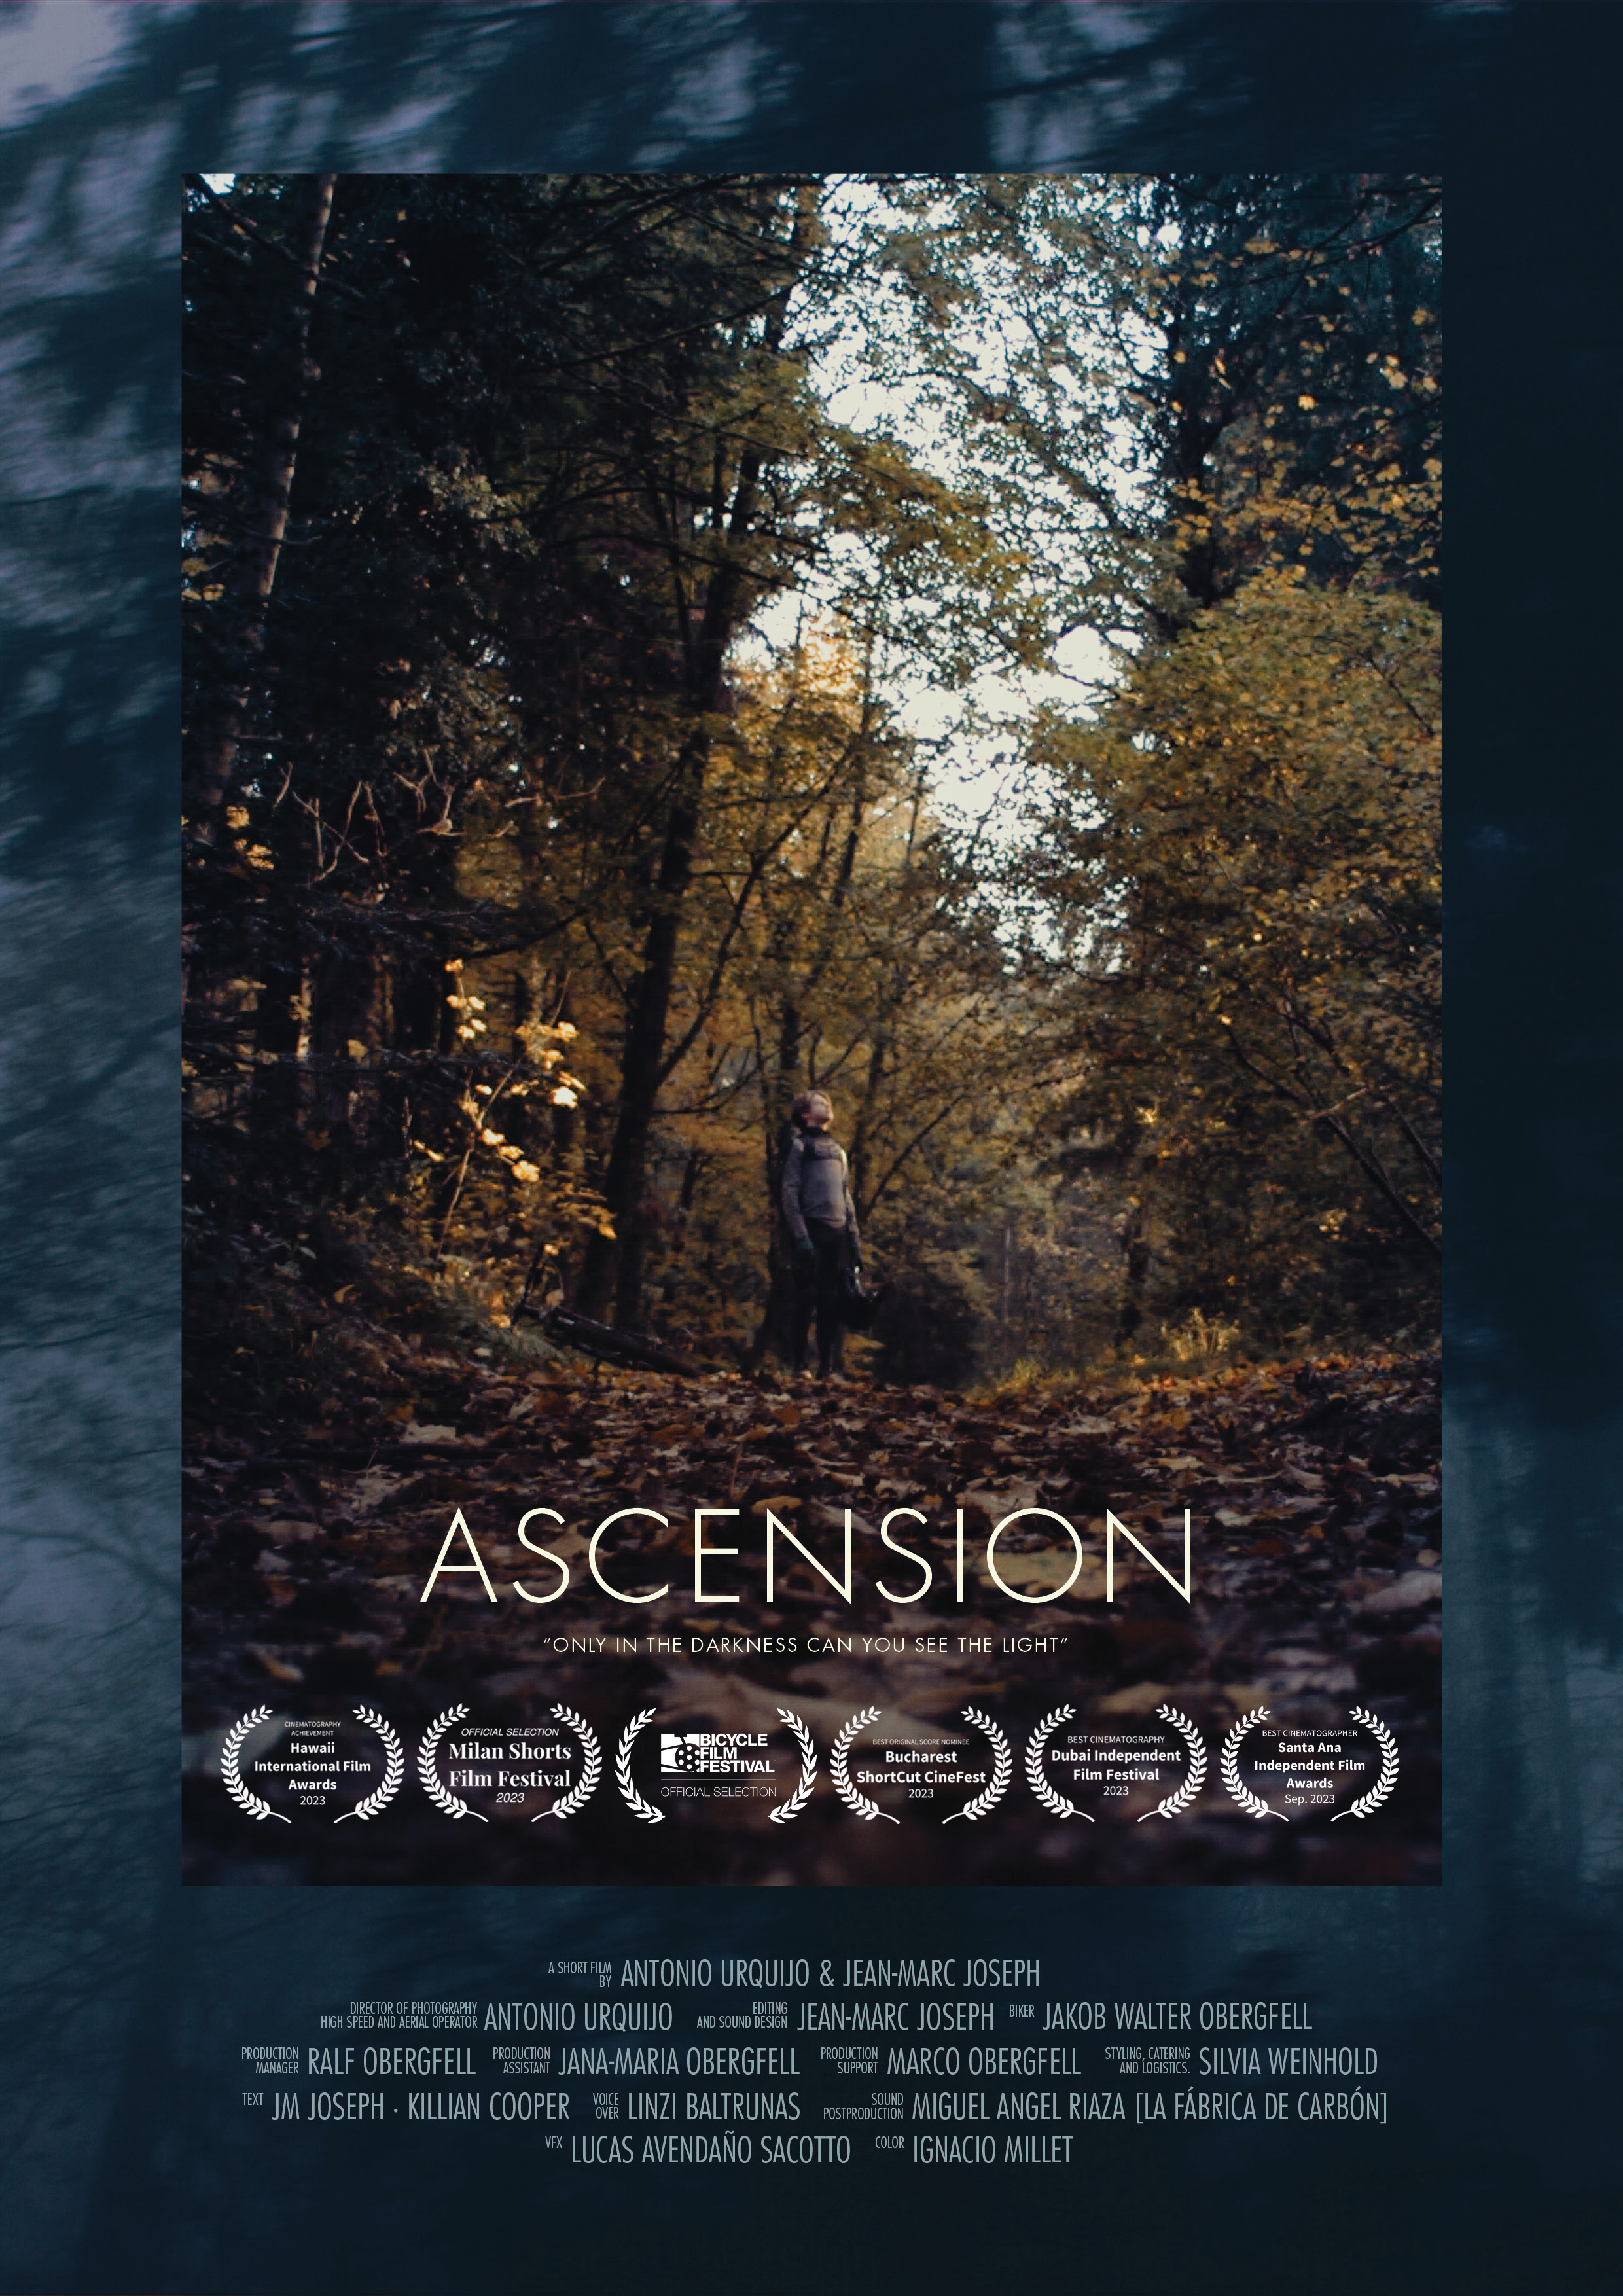 ASCENSION | Ascension video